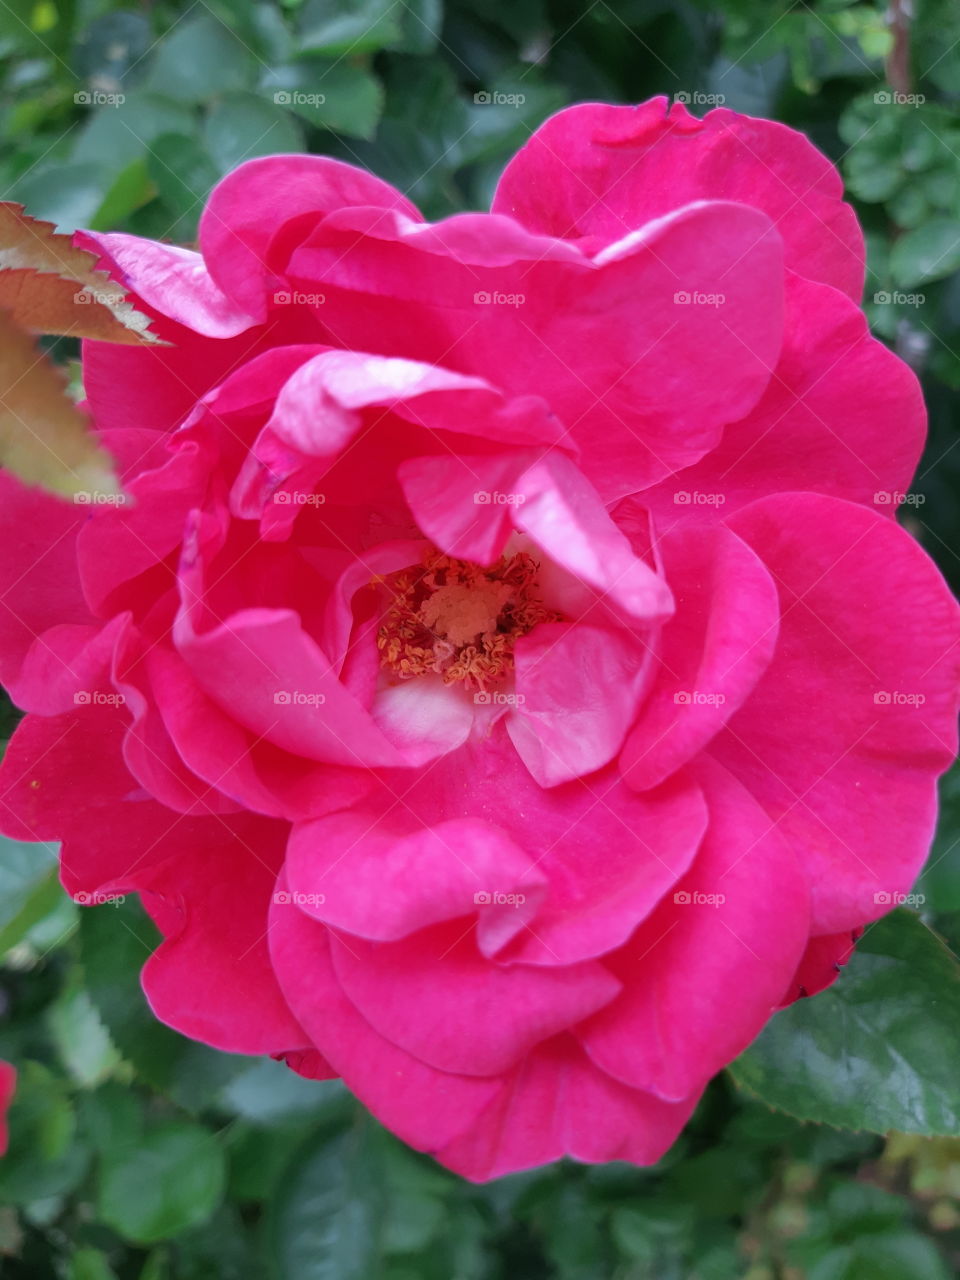 Rose up close